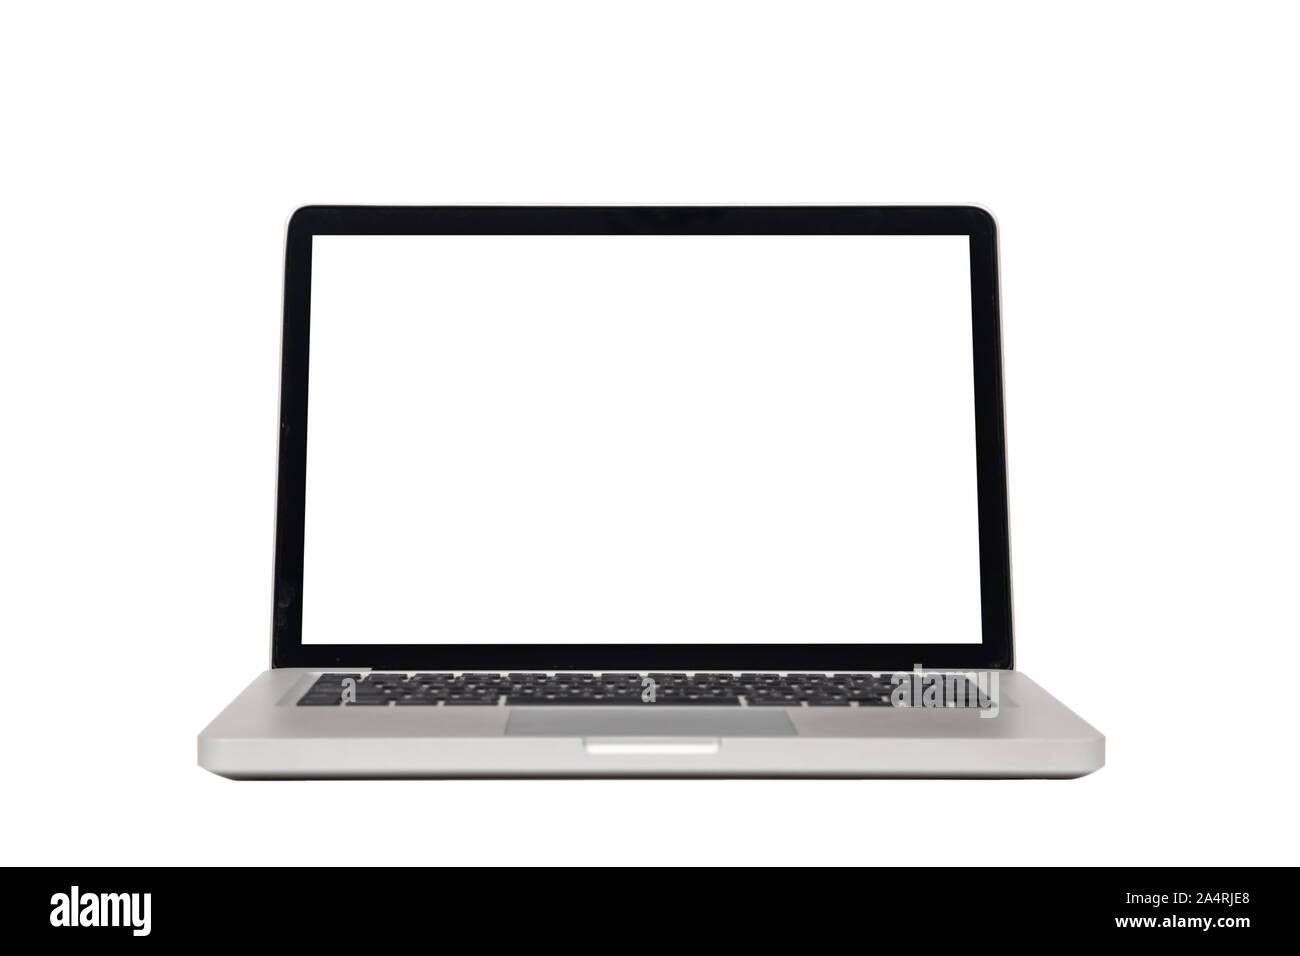 Modelo de ordenador portátil con pantalla en blanco vacío aislado sobre fondo blanco con trazado de recorte, vista frontal del concepto de tecnología informática moderna. Foto de stock